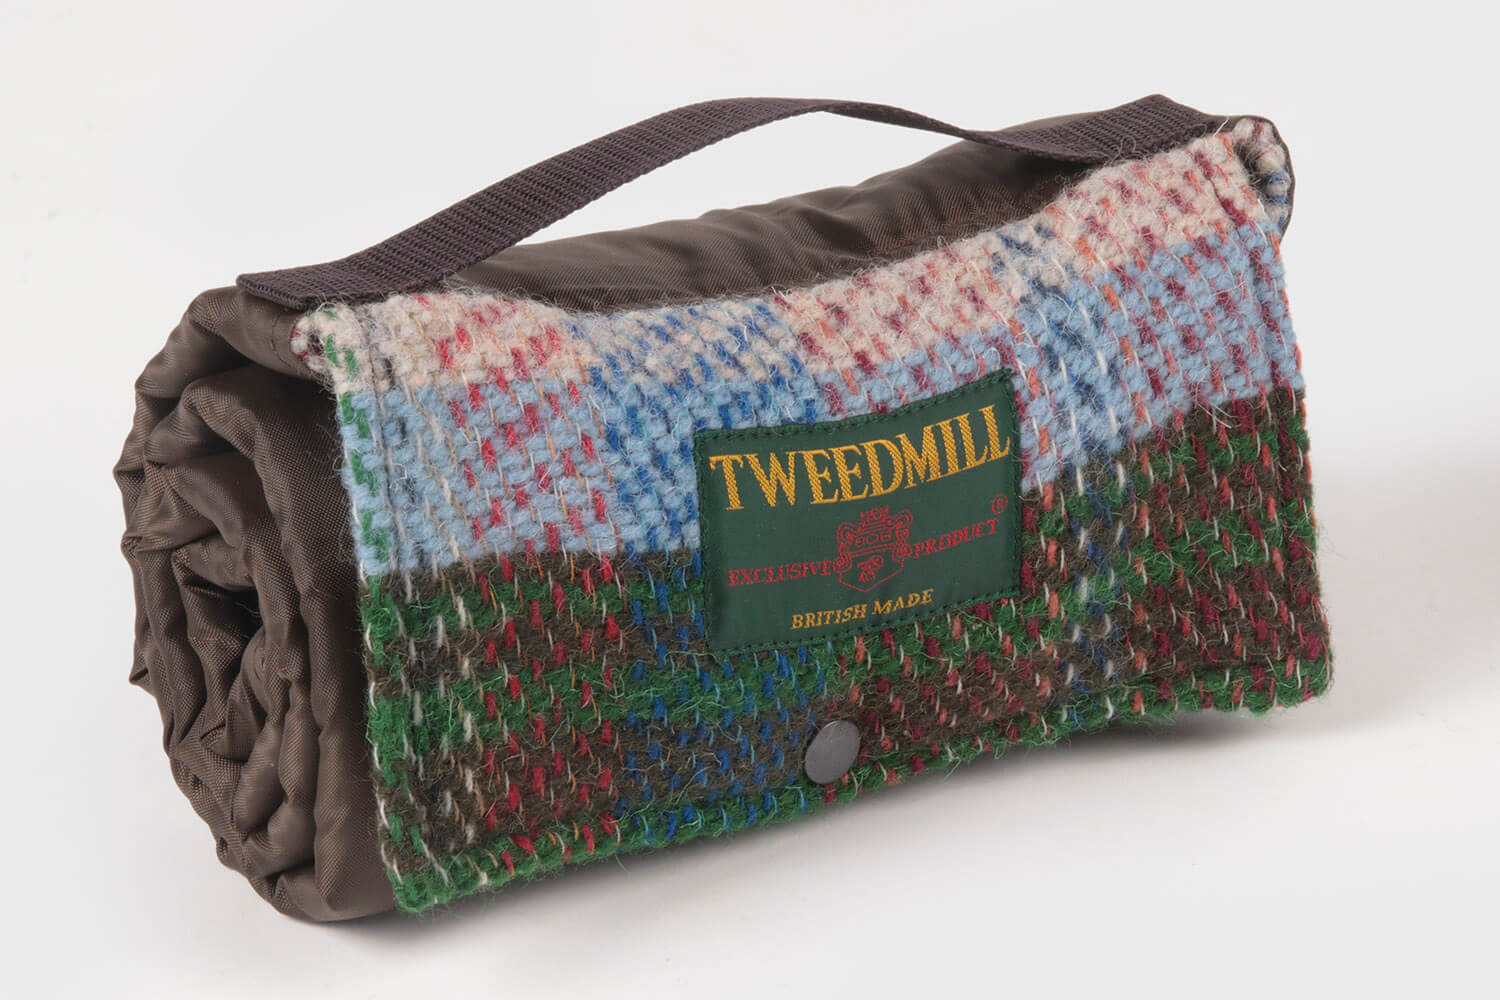 Tweedmill-Picknickkleed wol-Tartan-Groen-Bruin-Recycled-waterdicht